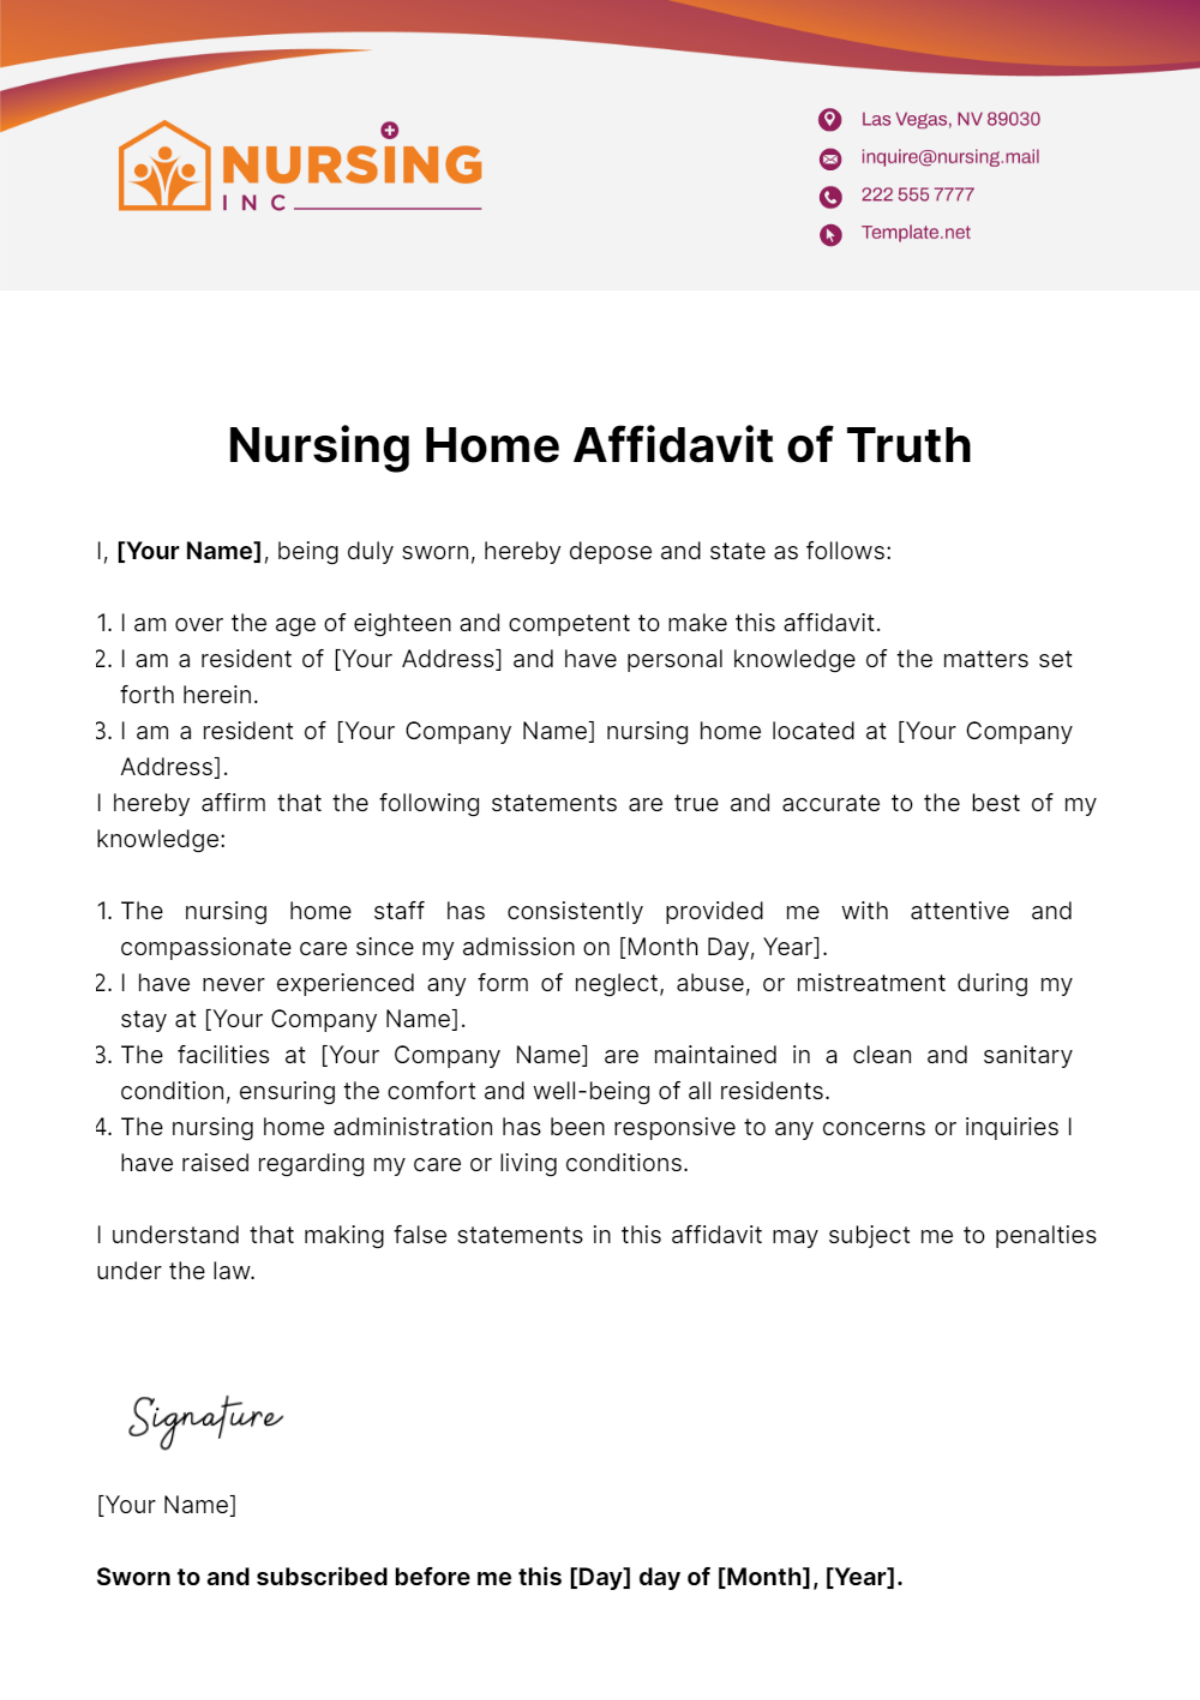 Nursing Home Affidavit of Truth Template